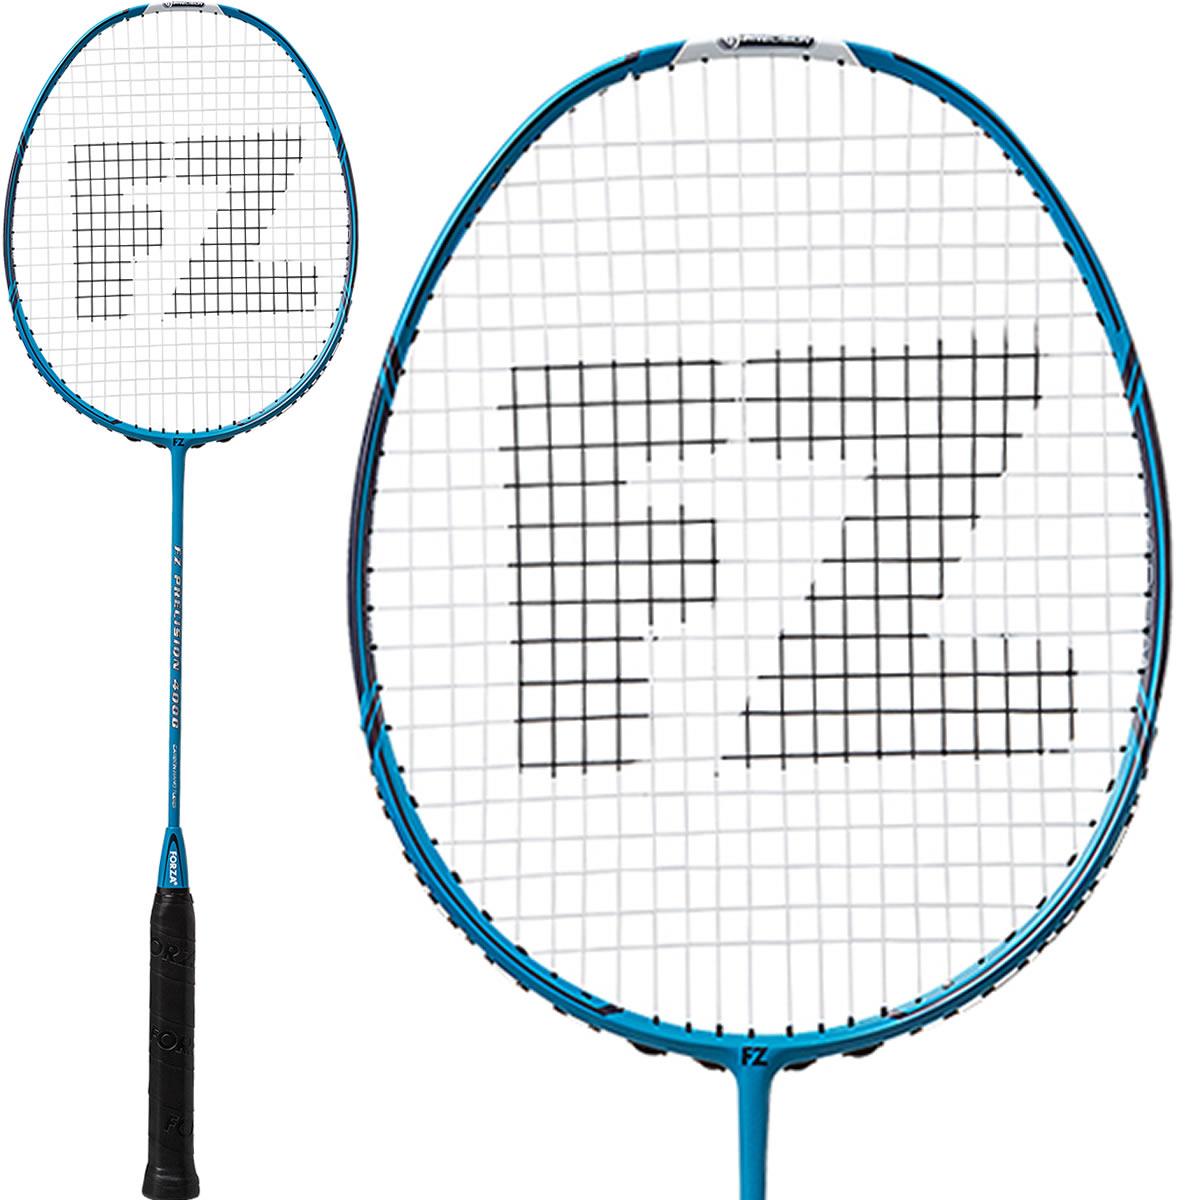 FZ Forza Precision 4000 Badminton Racket - Blue